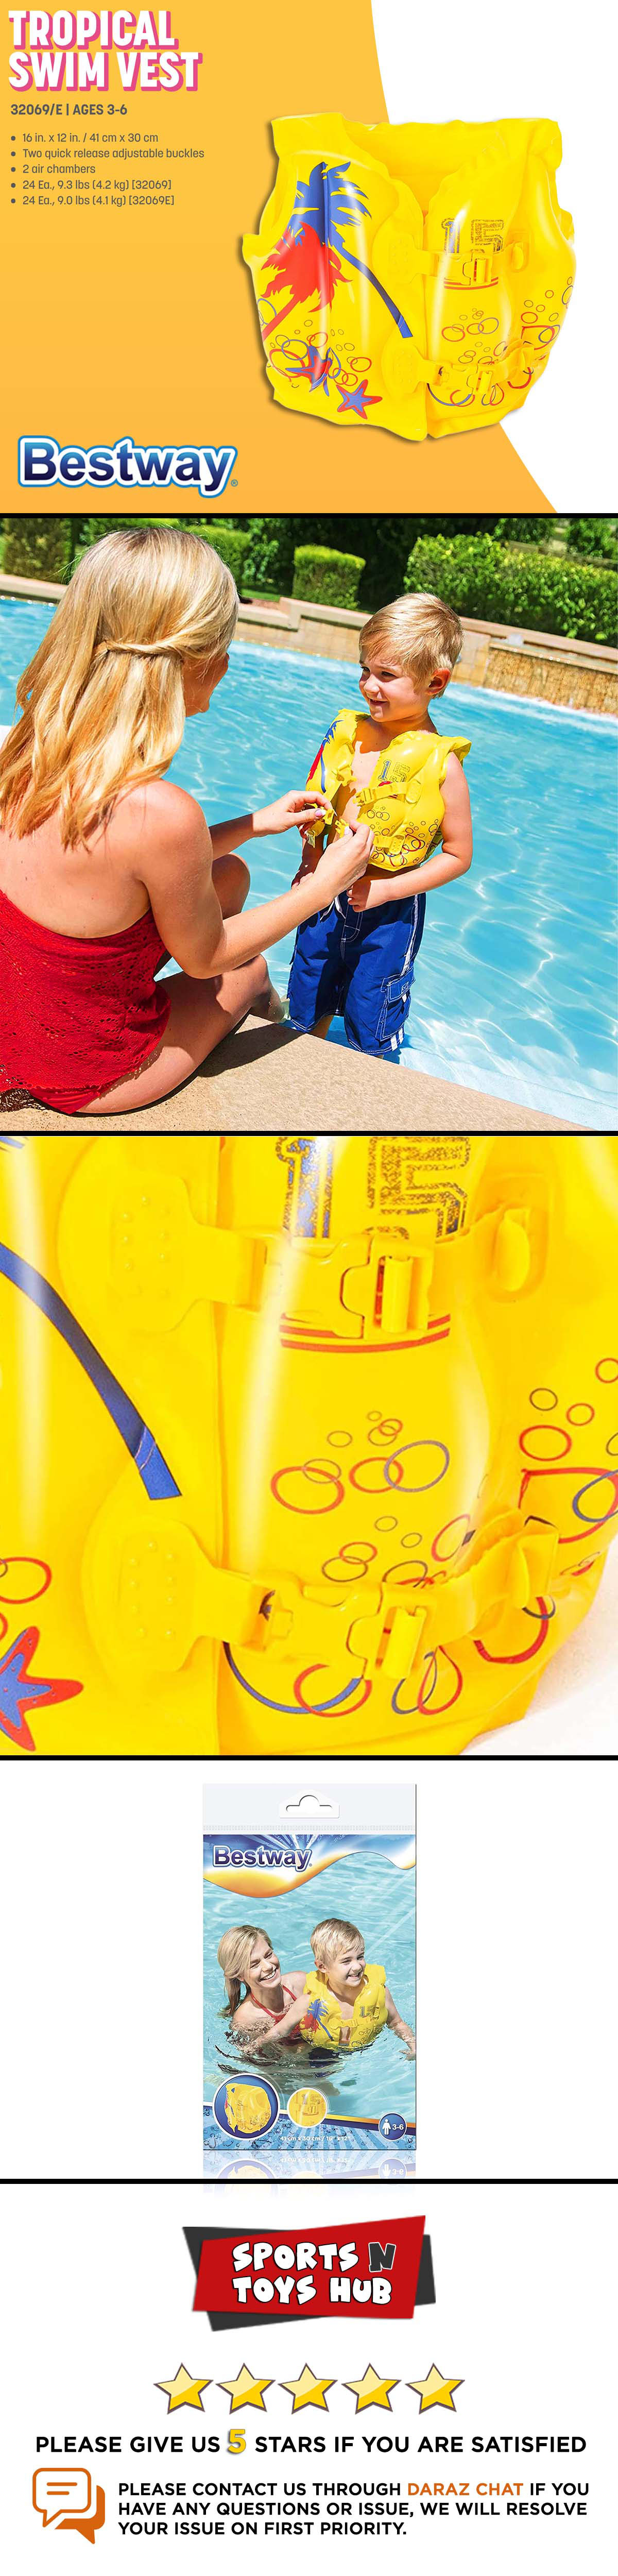 Bestway Inflatable Tropical Swim Vest 32069, Water games